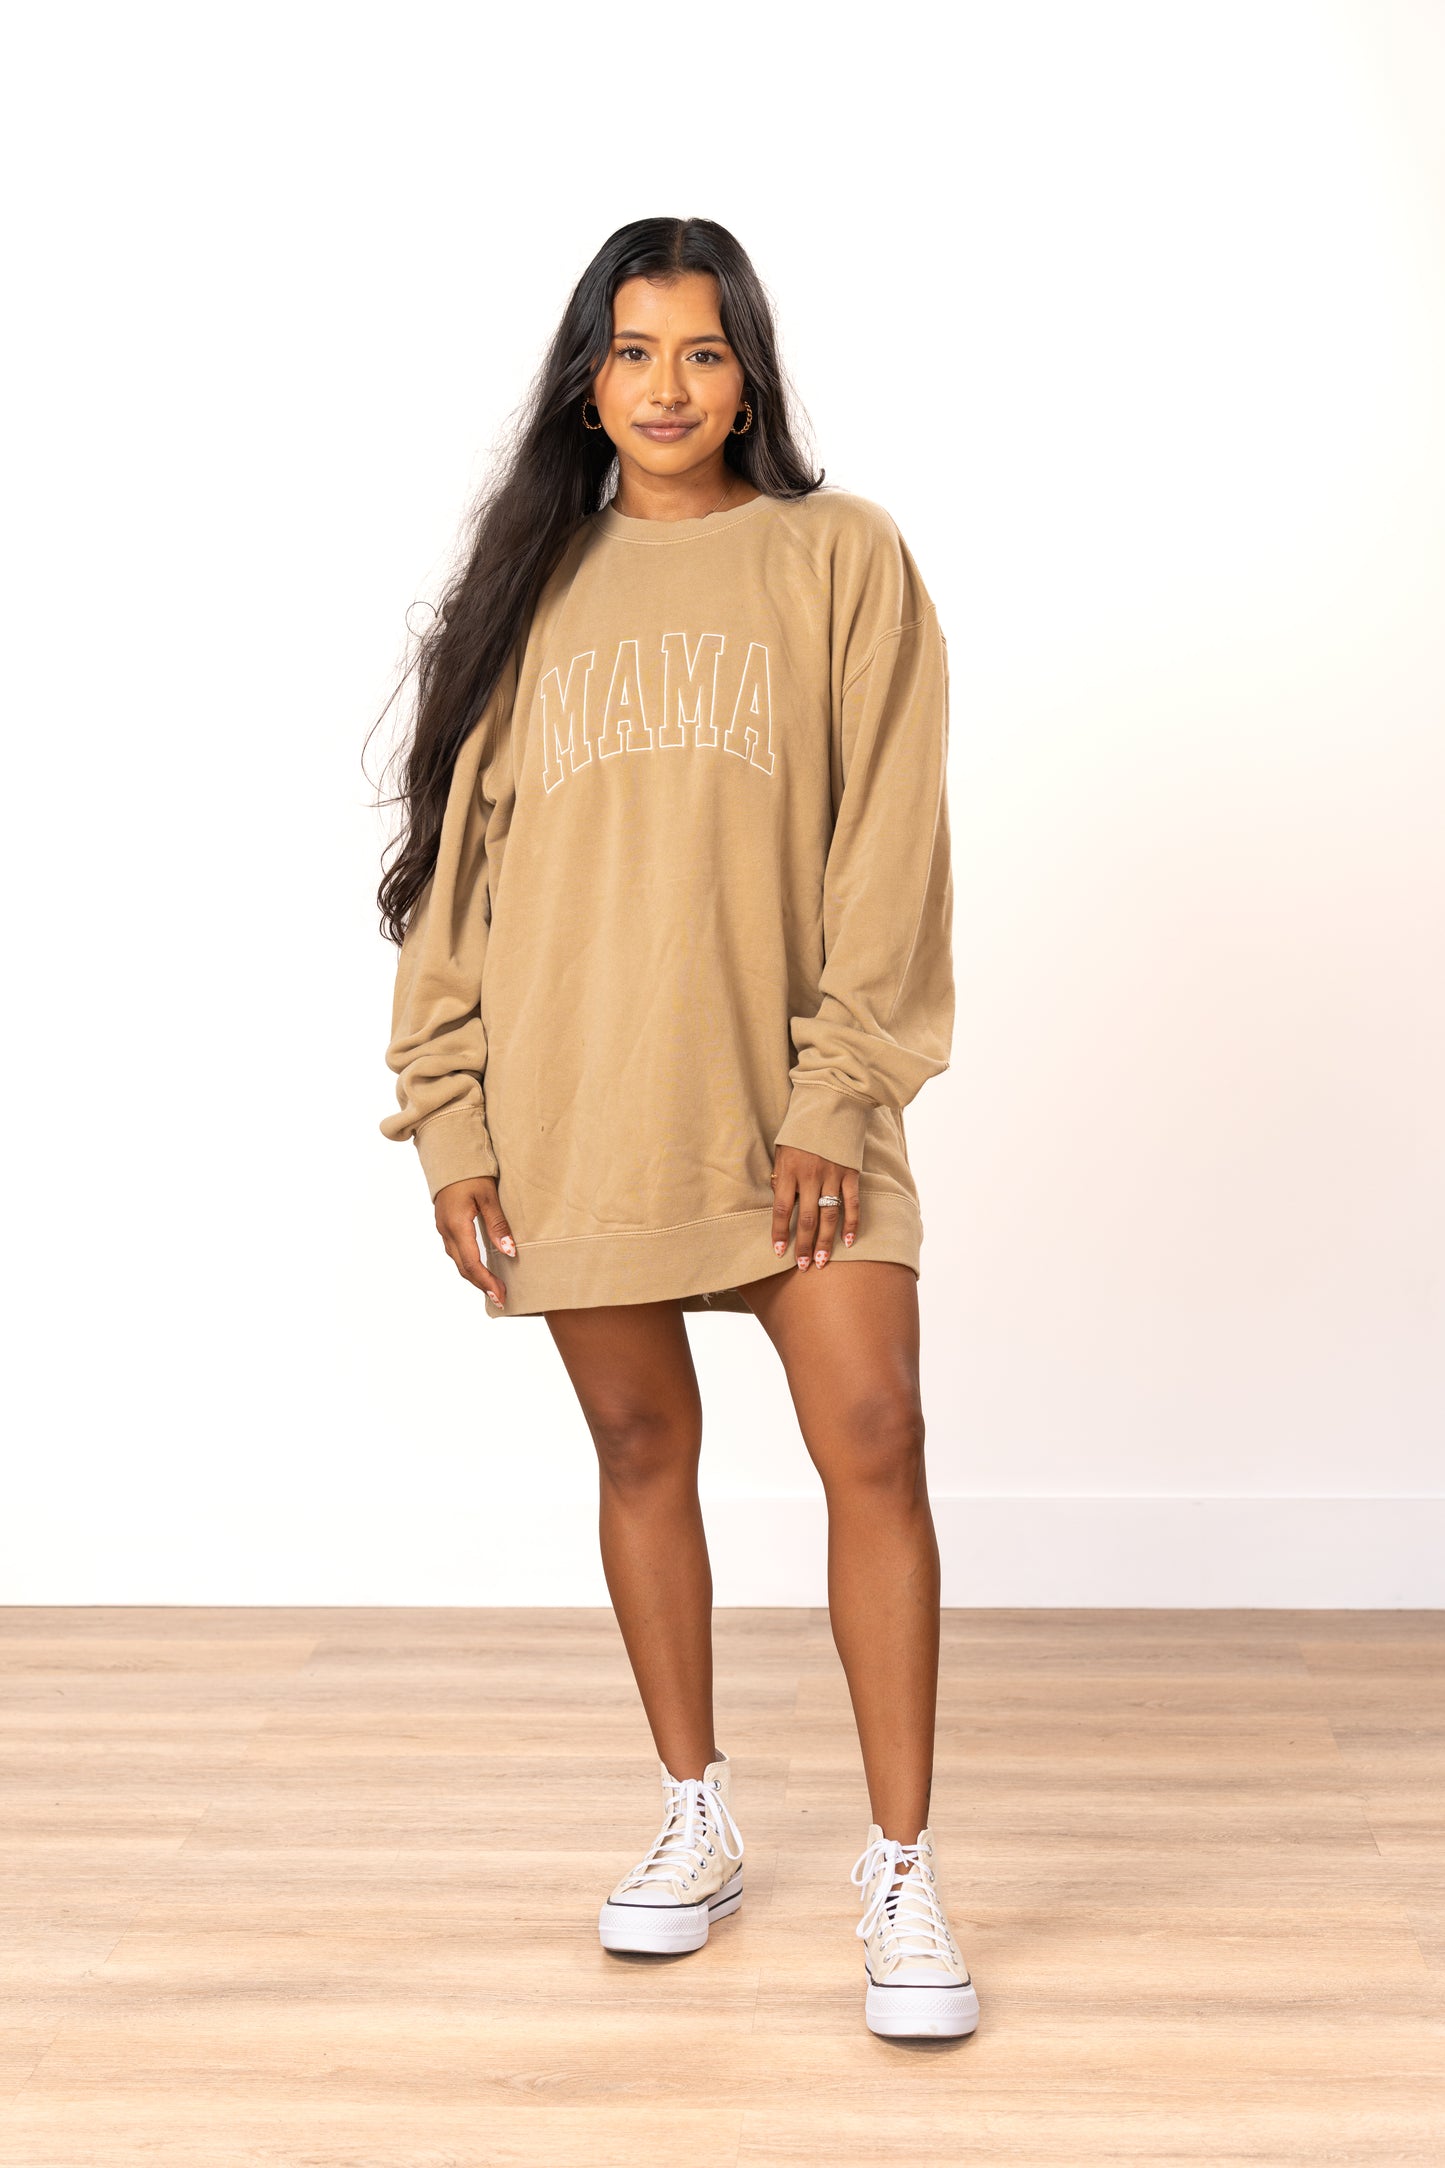 Mama Varsity (Creme) - Embroidered Sweatshirt (Tan)